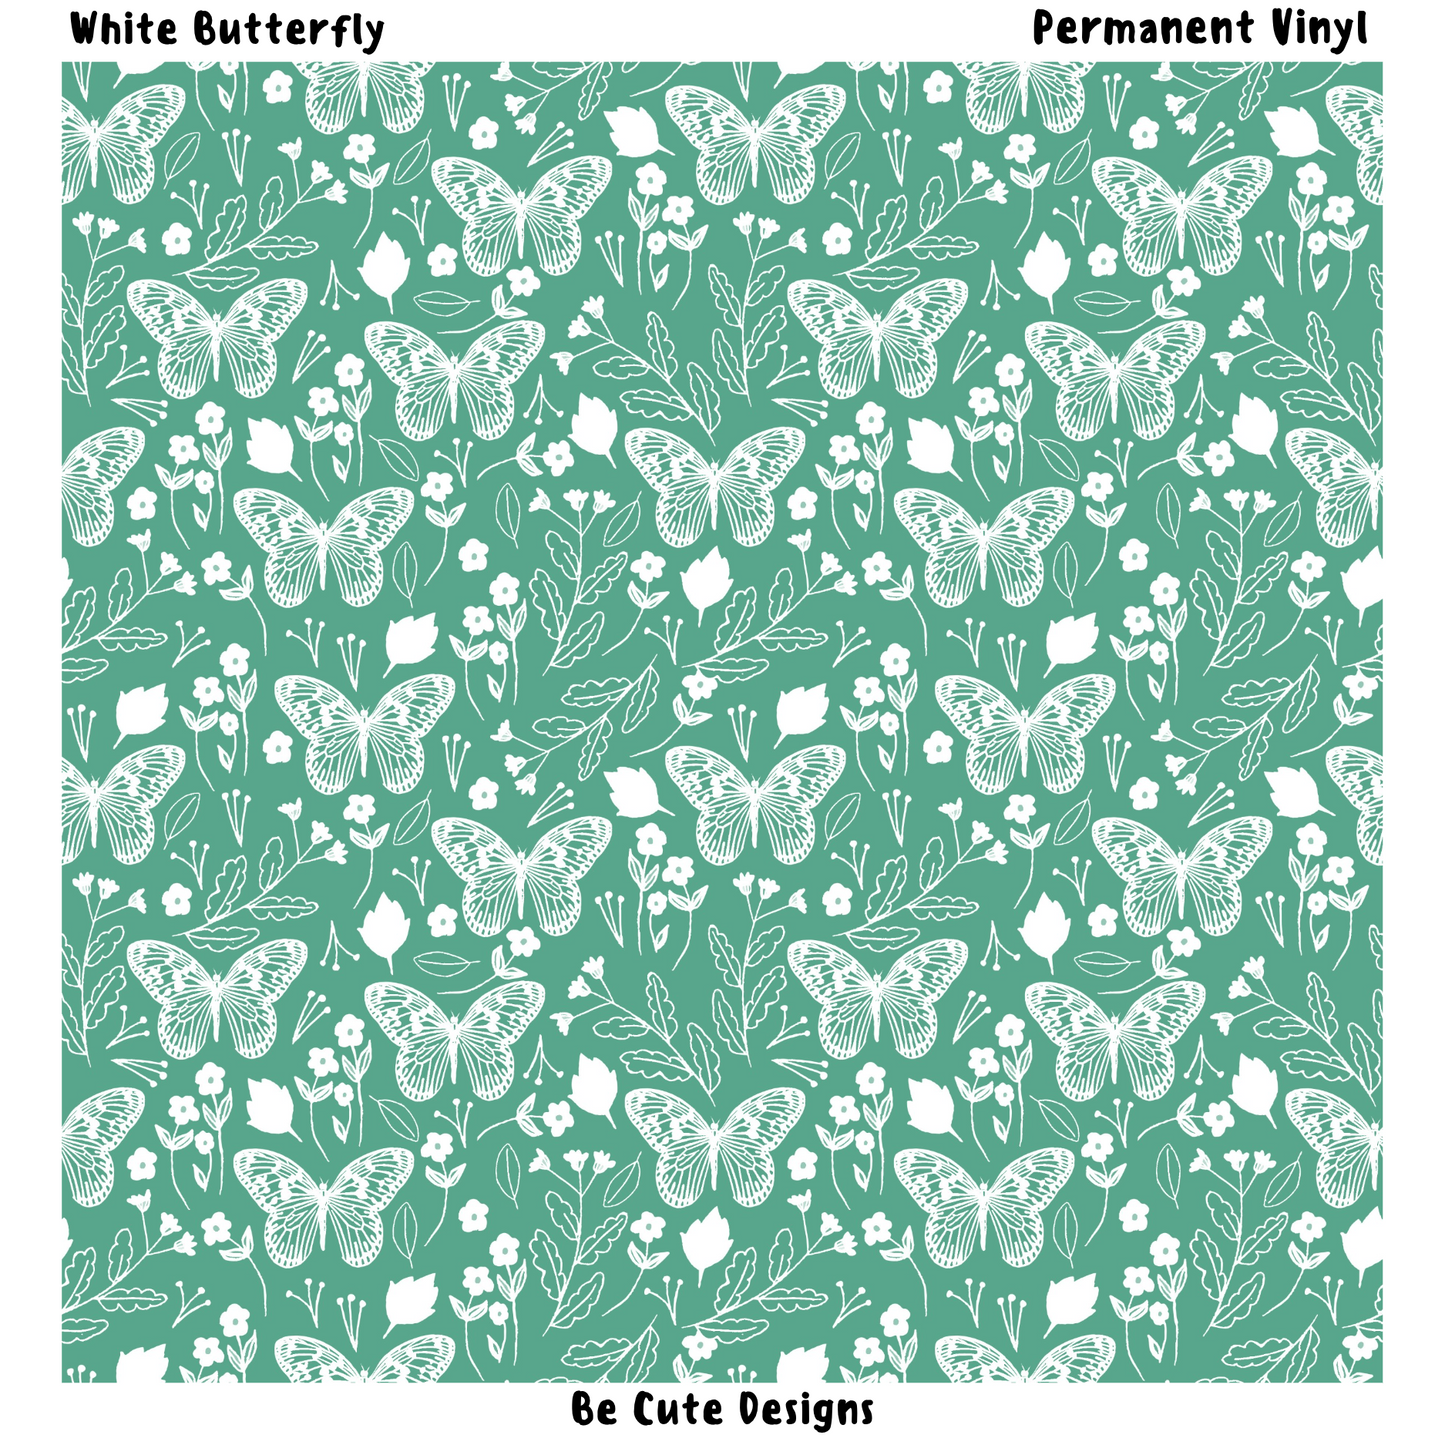 White Butterfly Patterned Vinyl